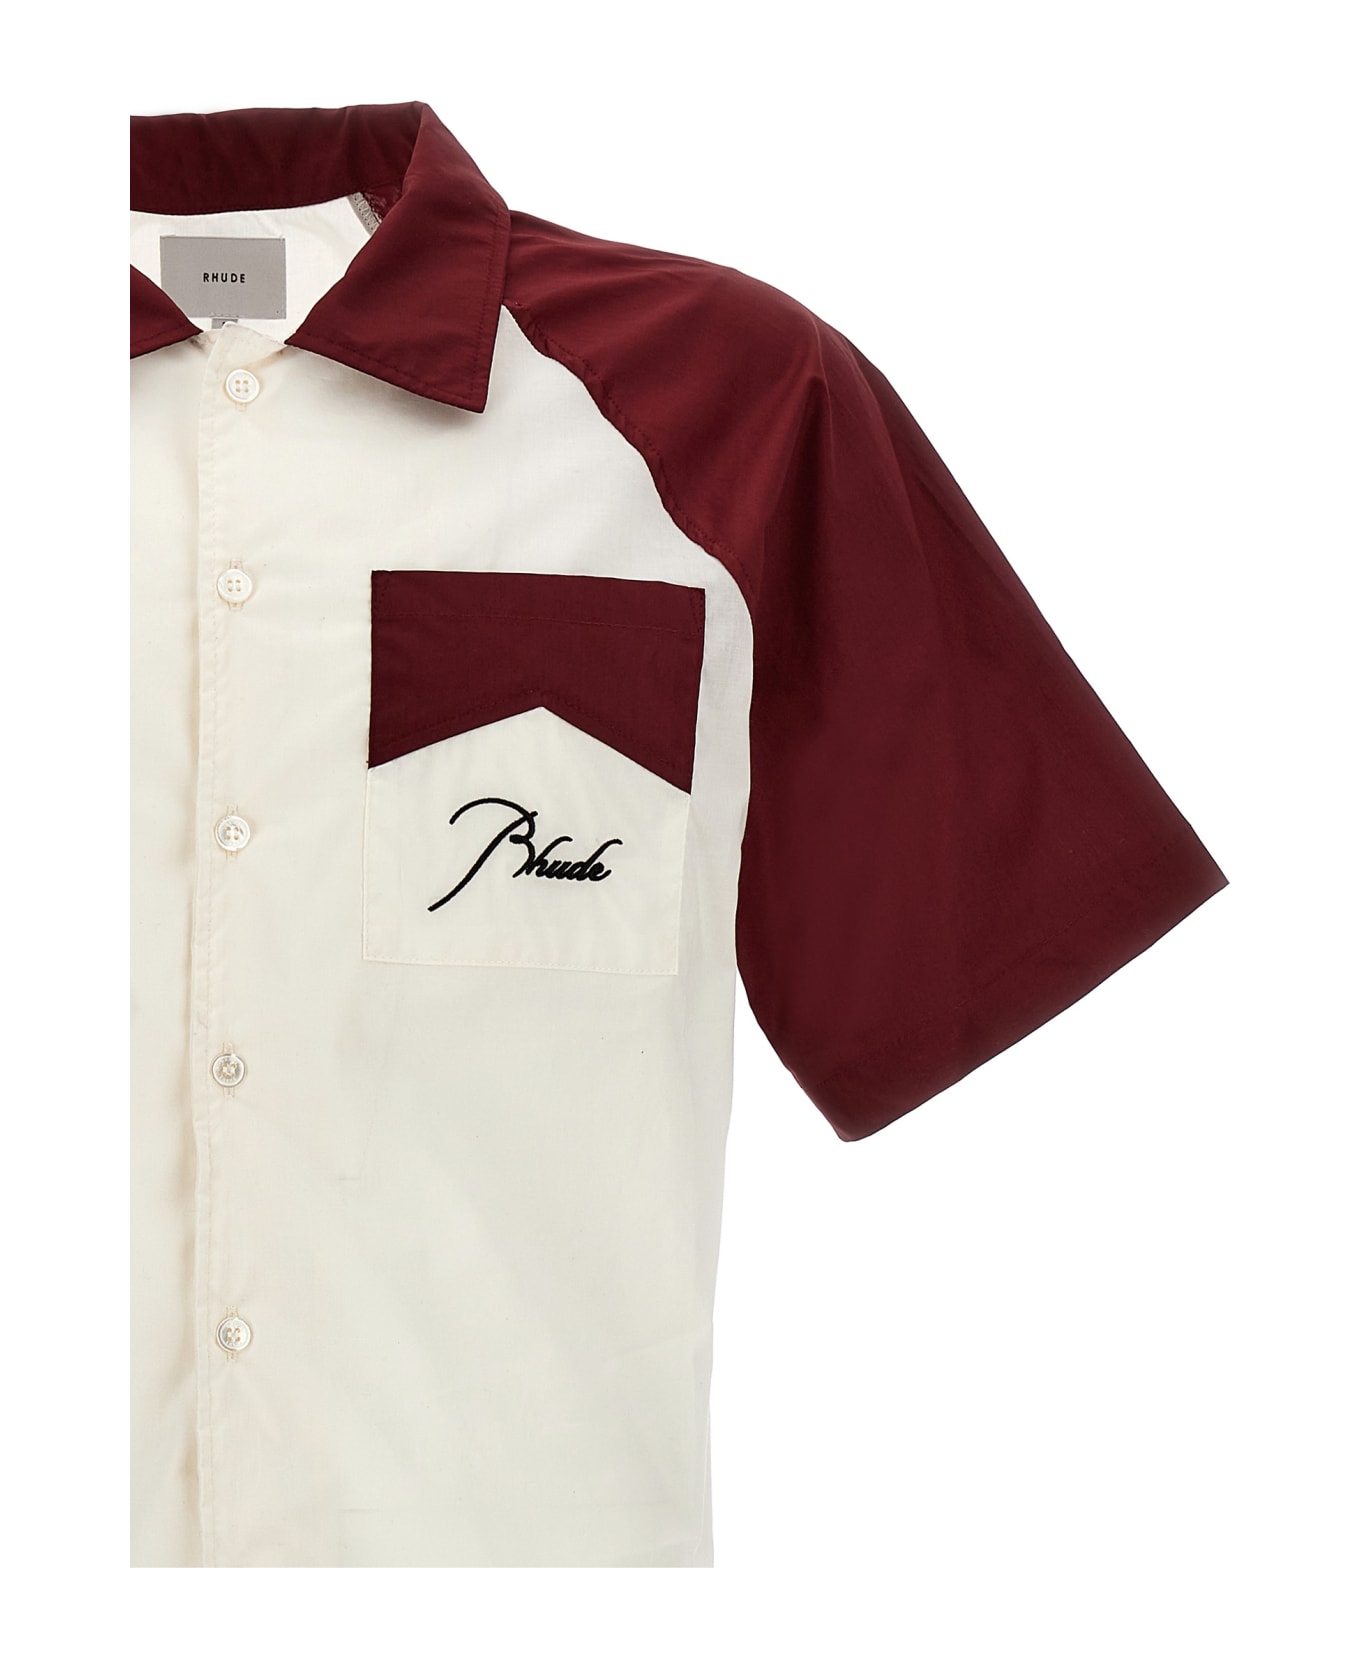 Rhude Logo Embroidery Shirt - Maroon/creme